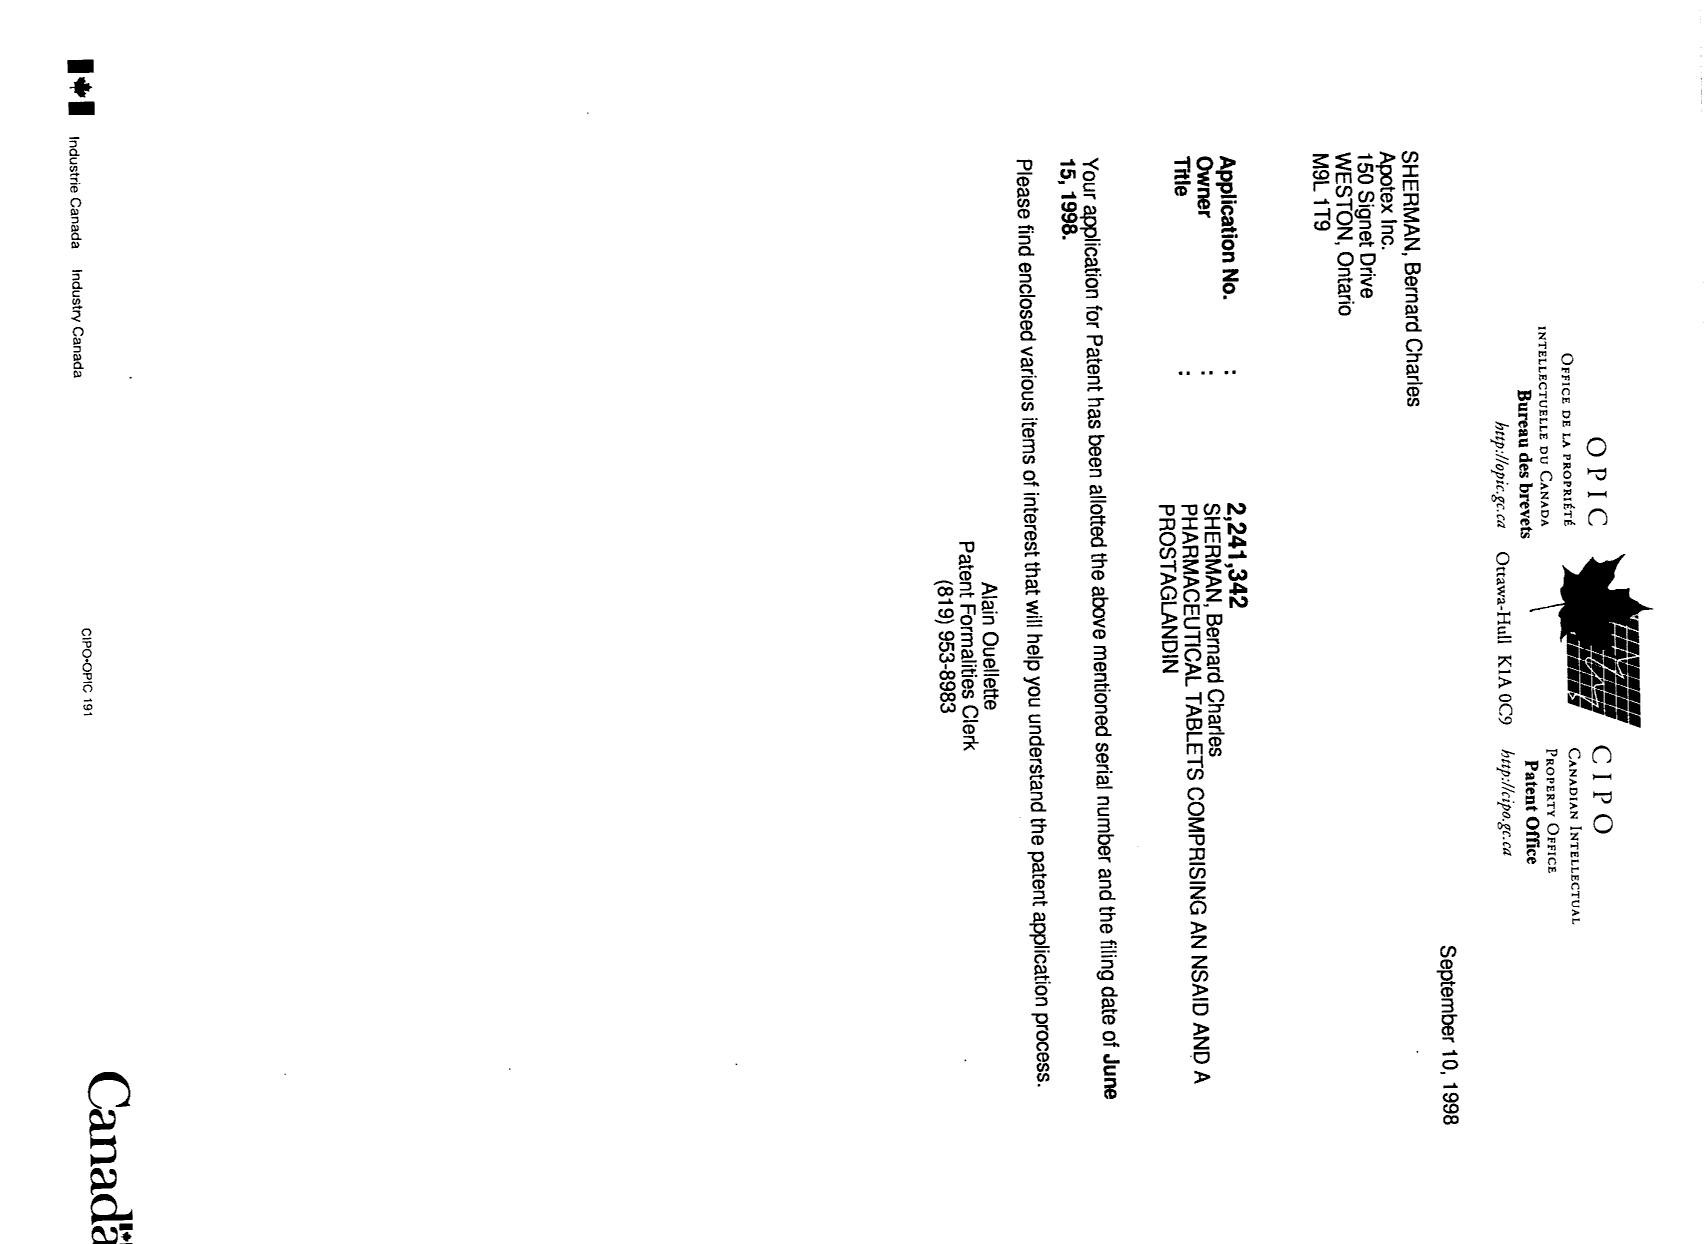 Canadian Patent Document 2241342. Correspondence 19980910. Image 1 of 1